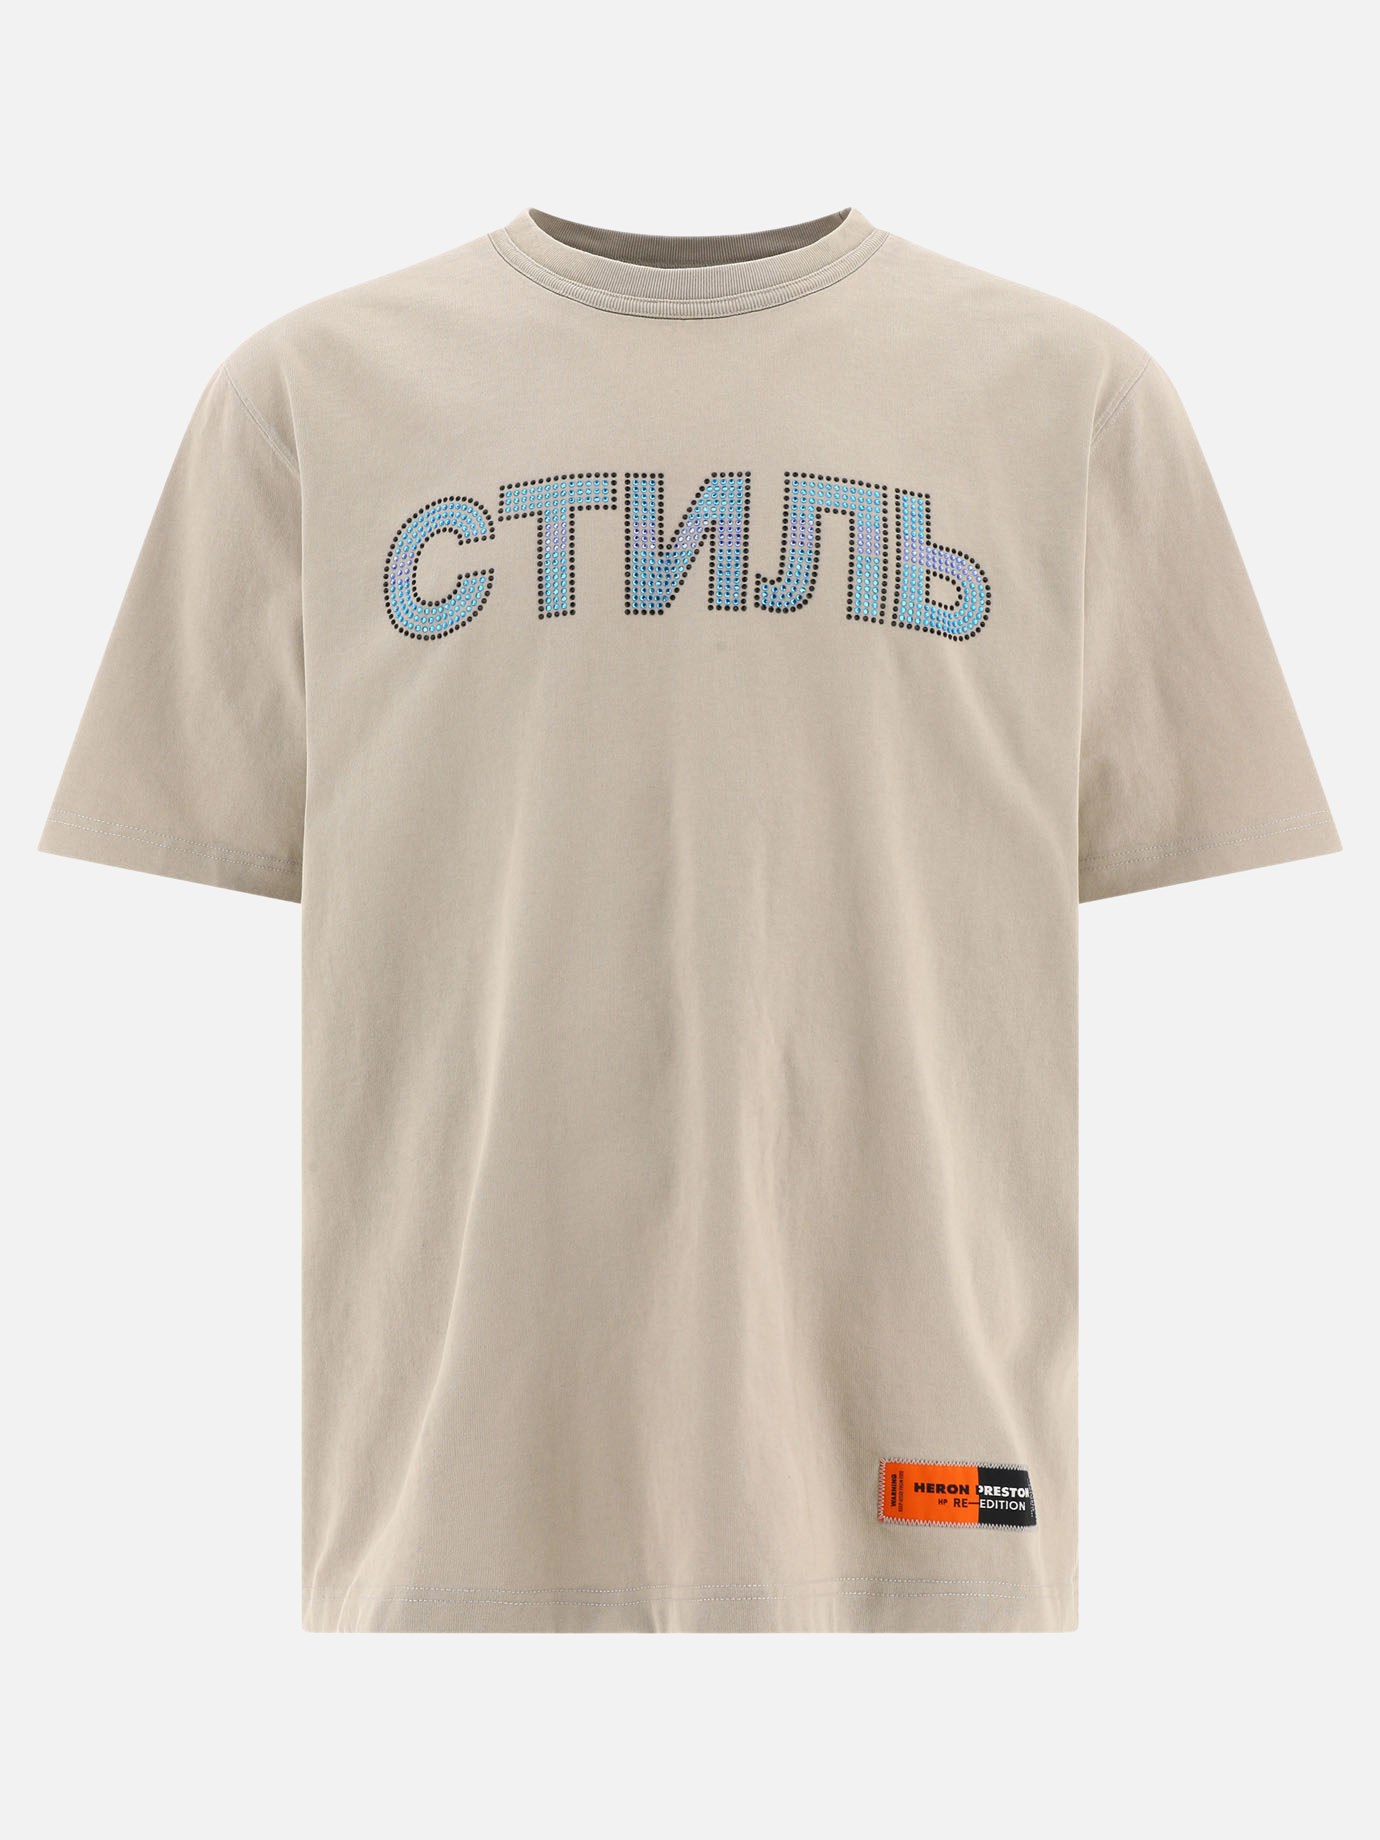  CTNMB Strass  t-shirtby Heron Preston - 1